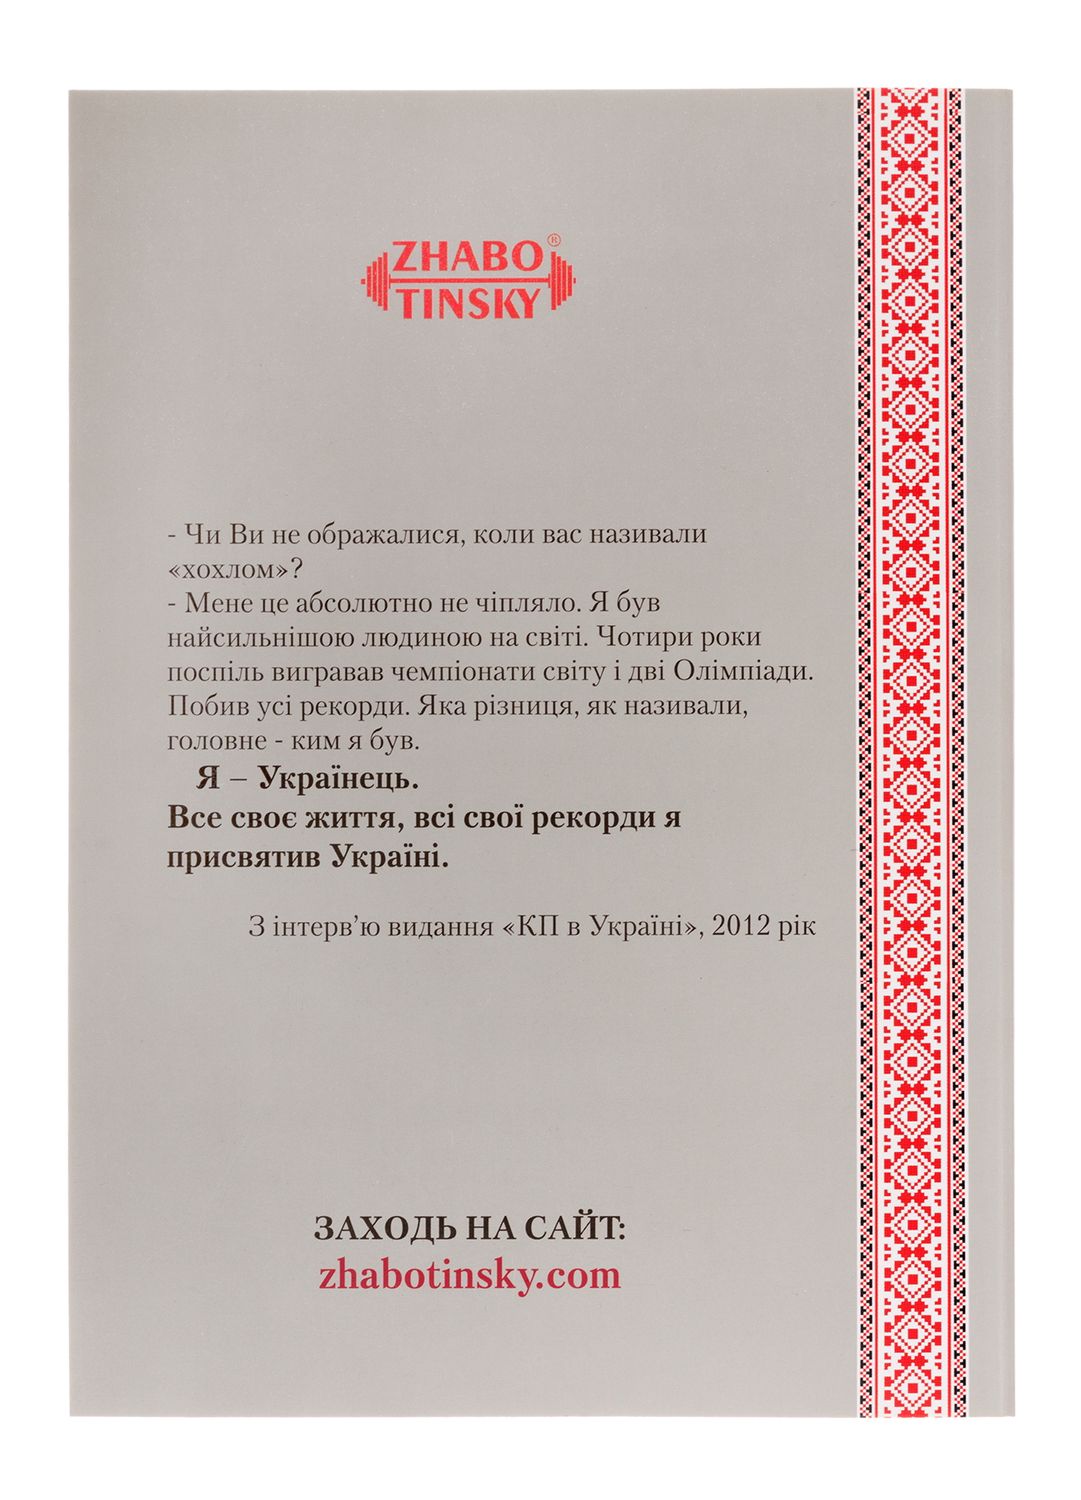 Leonid Zhabotinsky's book I am a Ukrainian